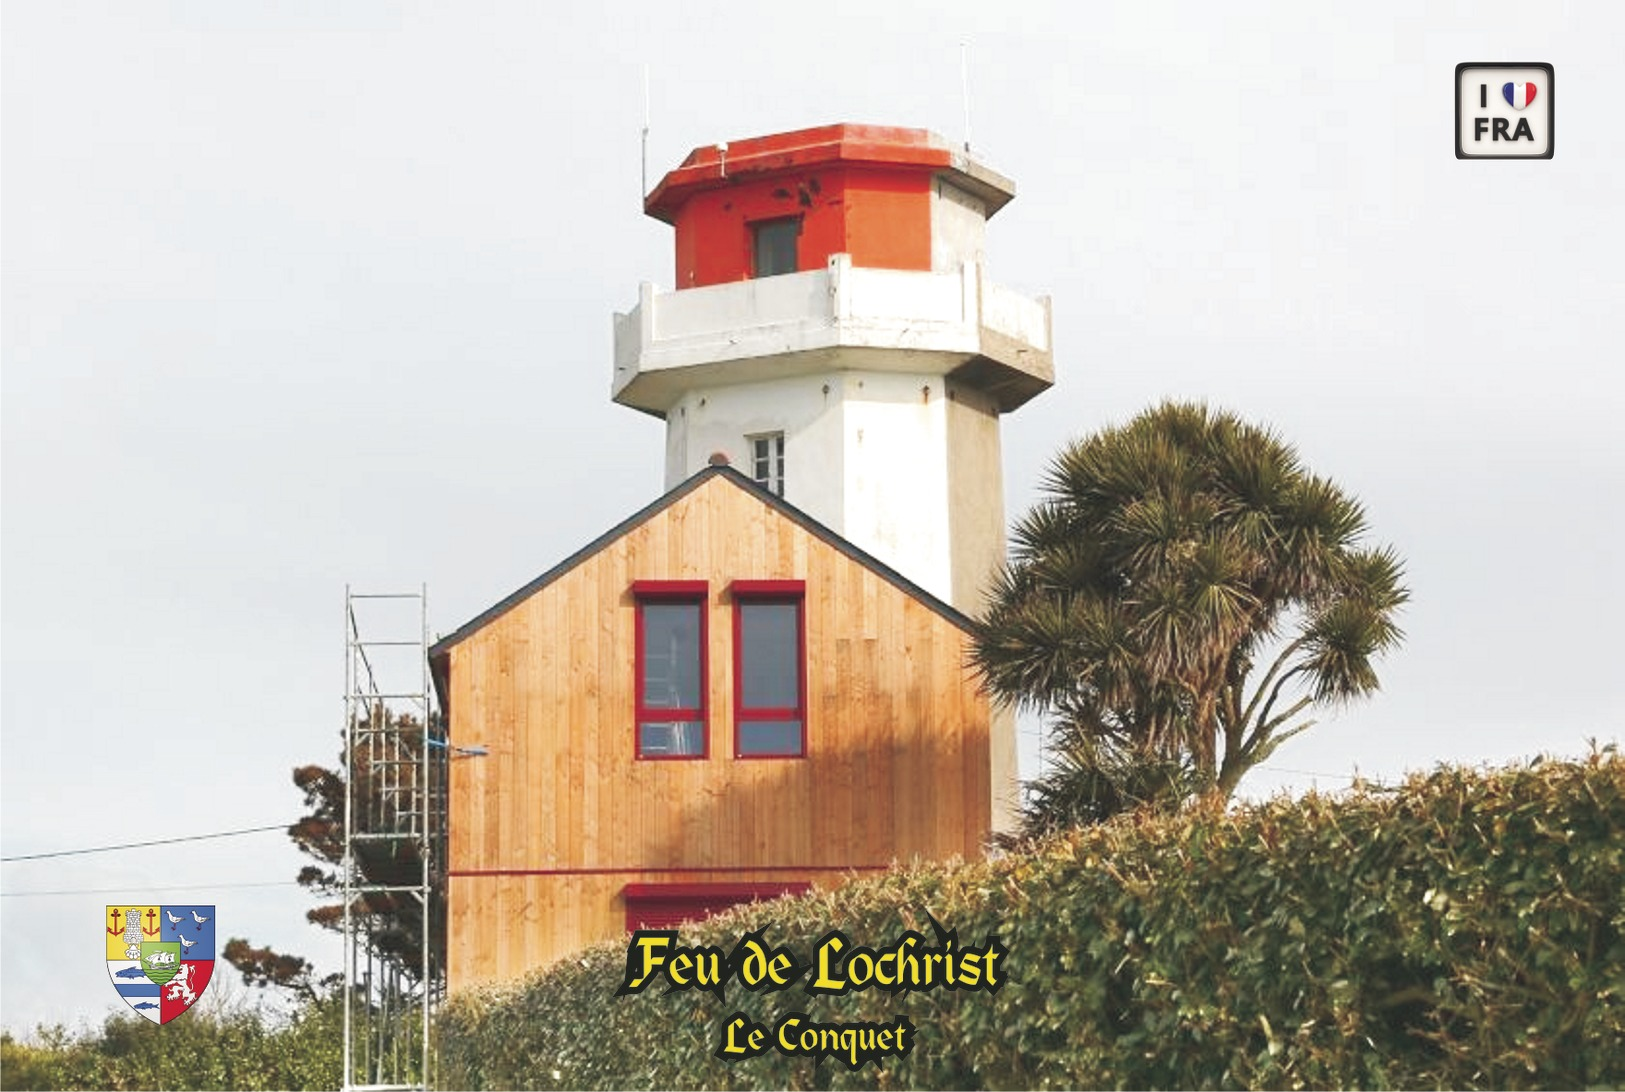 Set 6 Cartes Postales, Phares, Lighthouses Of Europe, France, Le Conquet, Feu De Lochrist - Faros